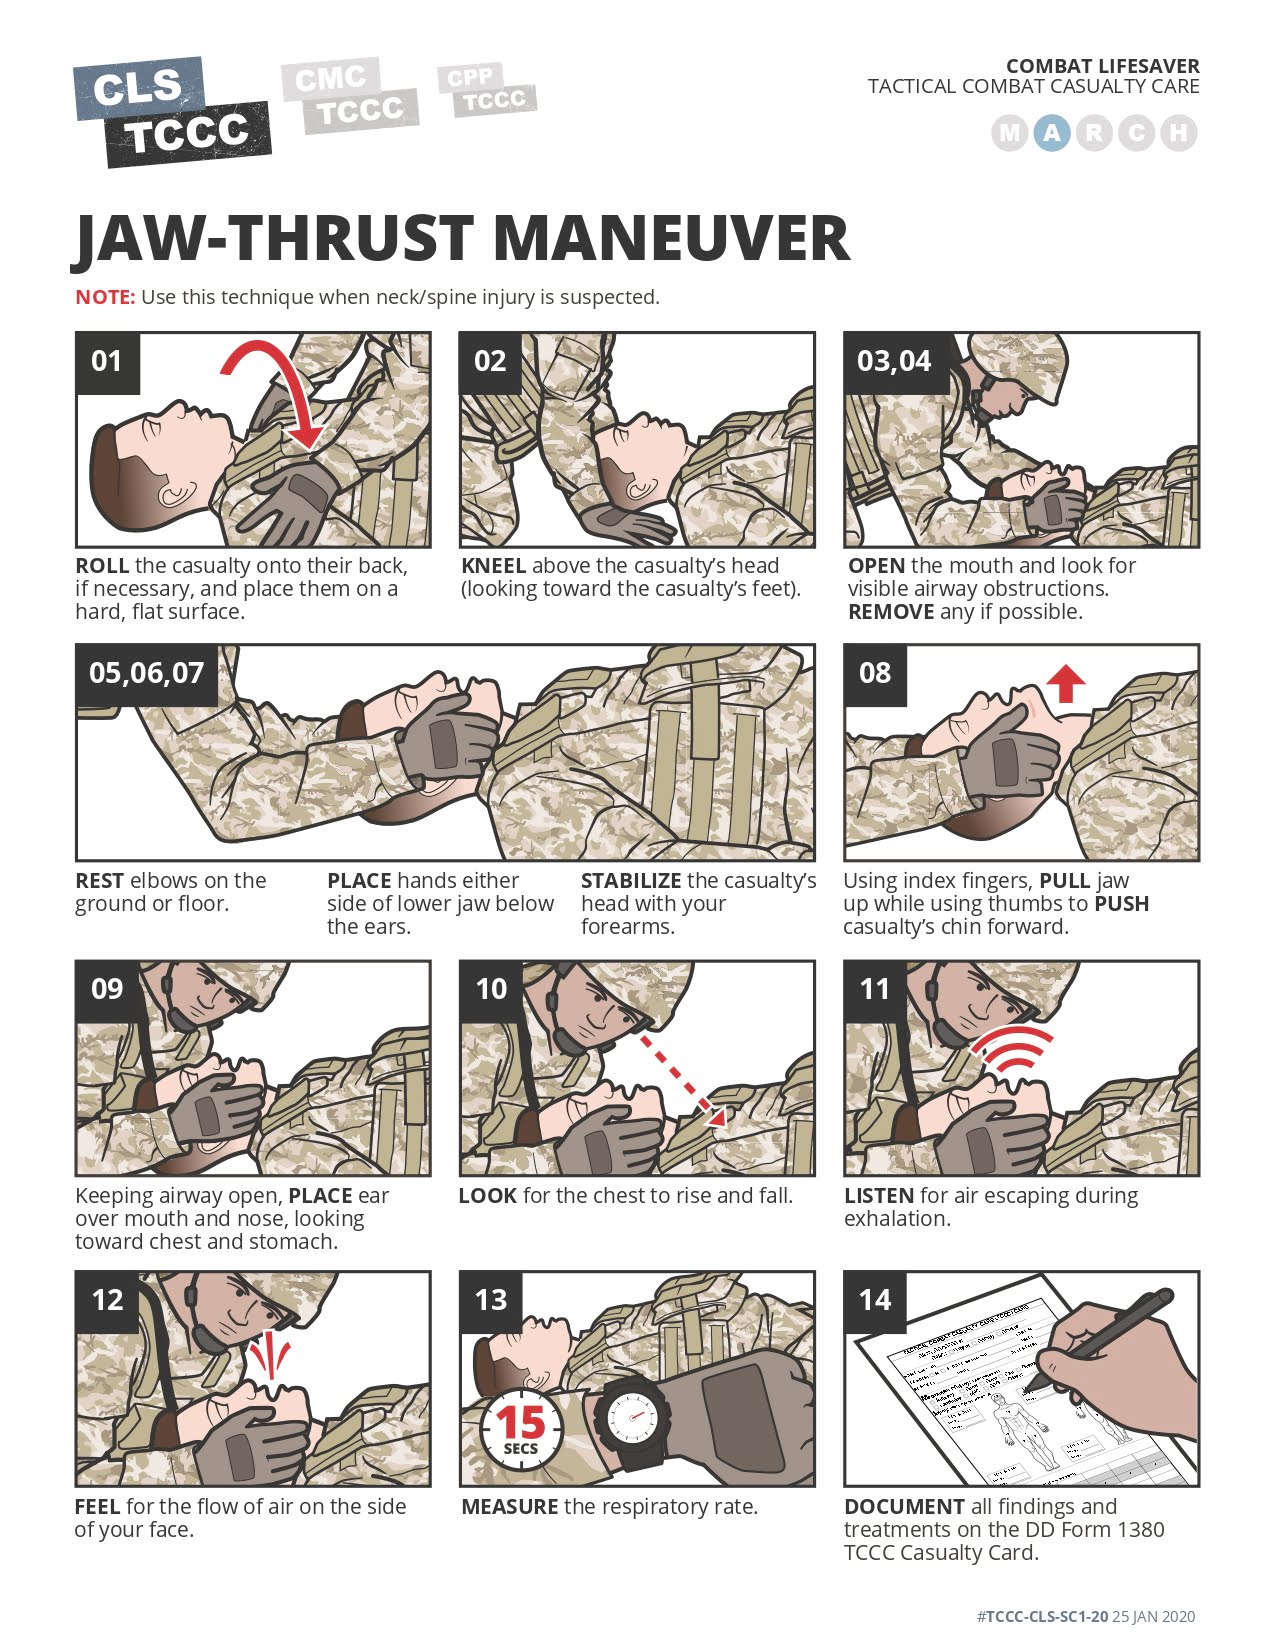 Jaw-Thrust Maneuvers